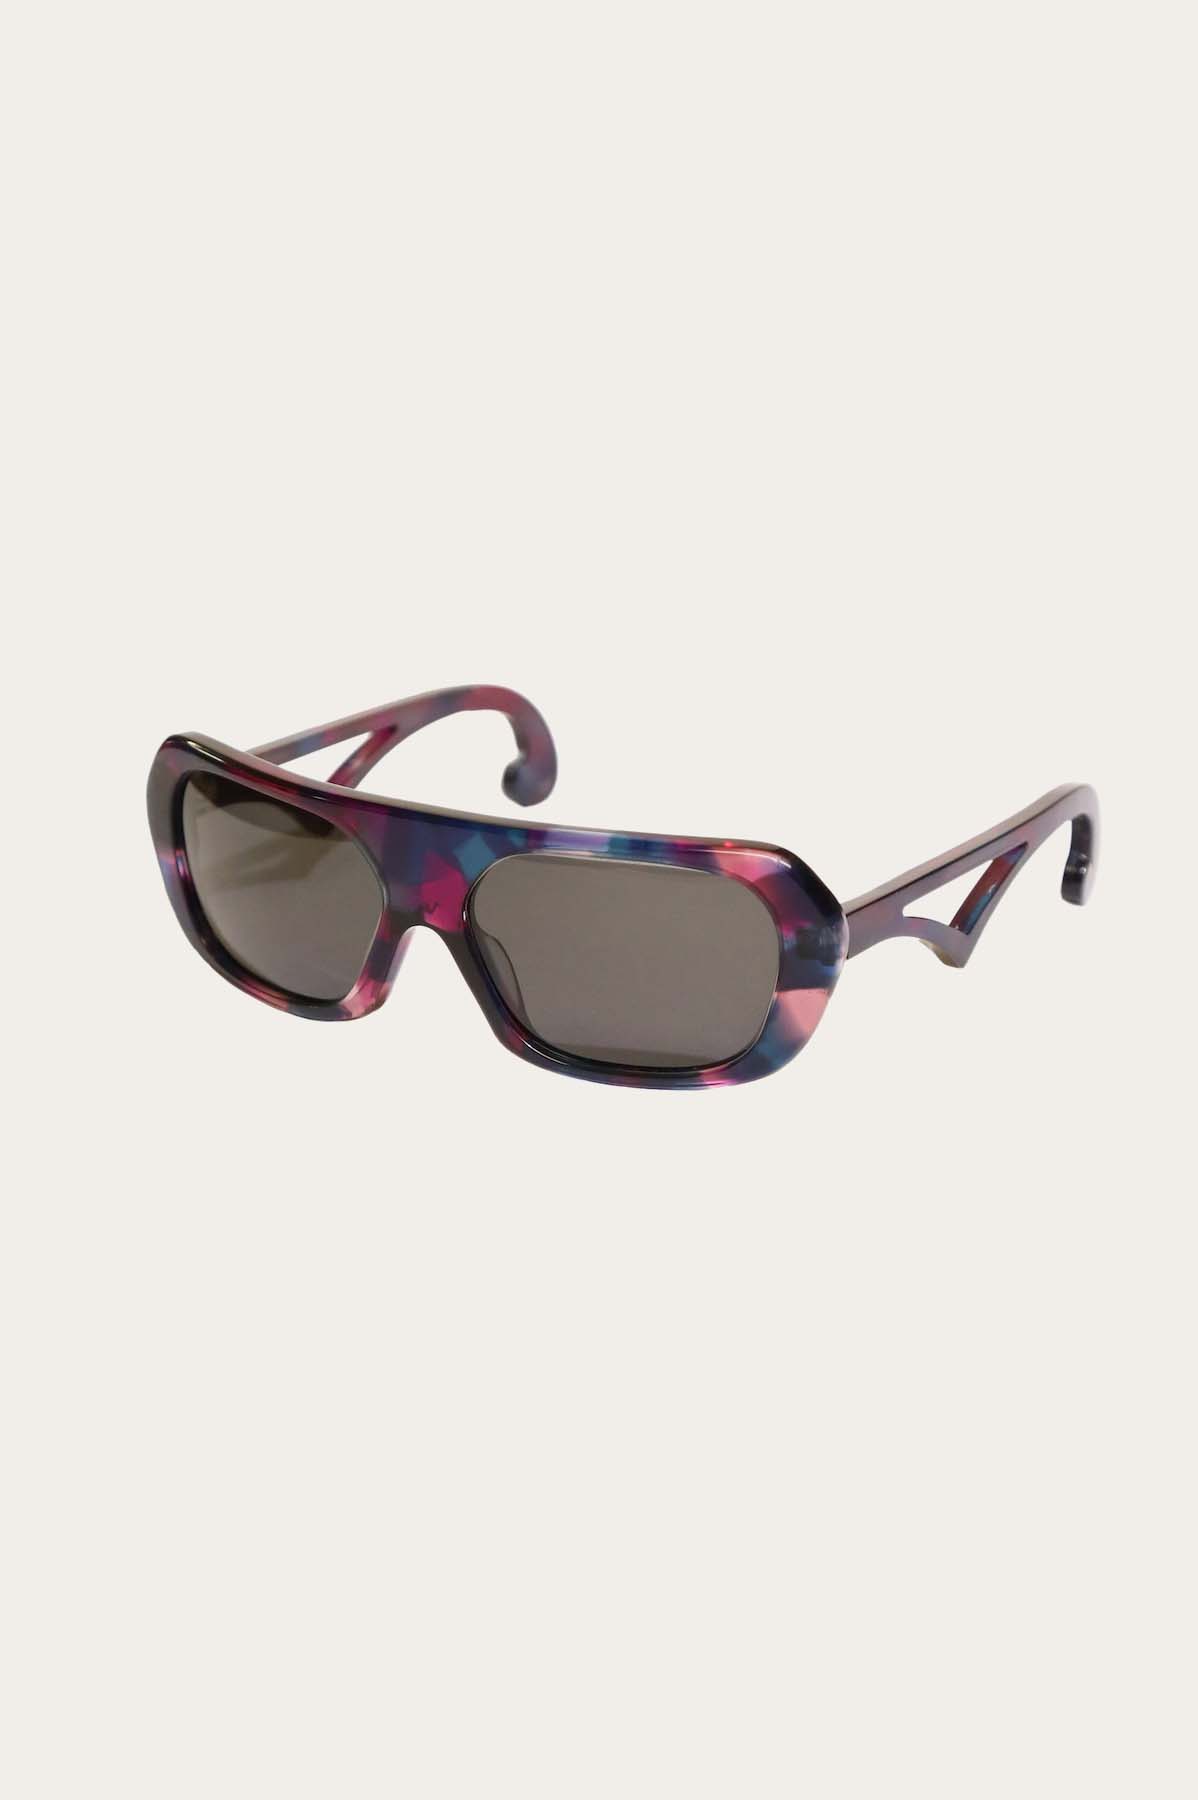 Pink Blue Camo, large eyeglass frame, custom-made Mod eyewear straight off our Fall 2019 Runway